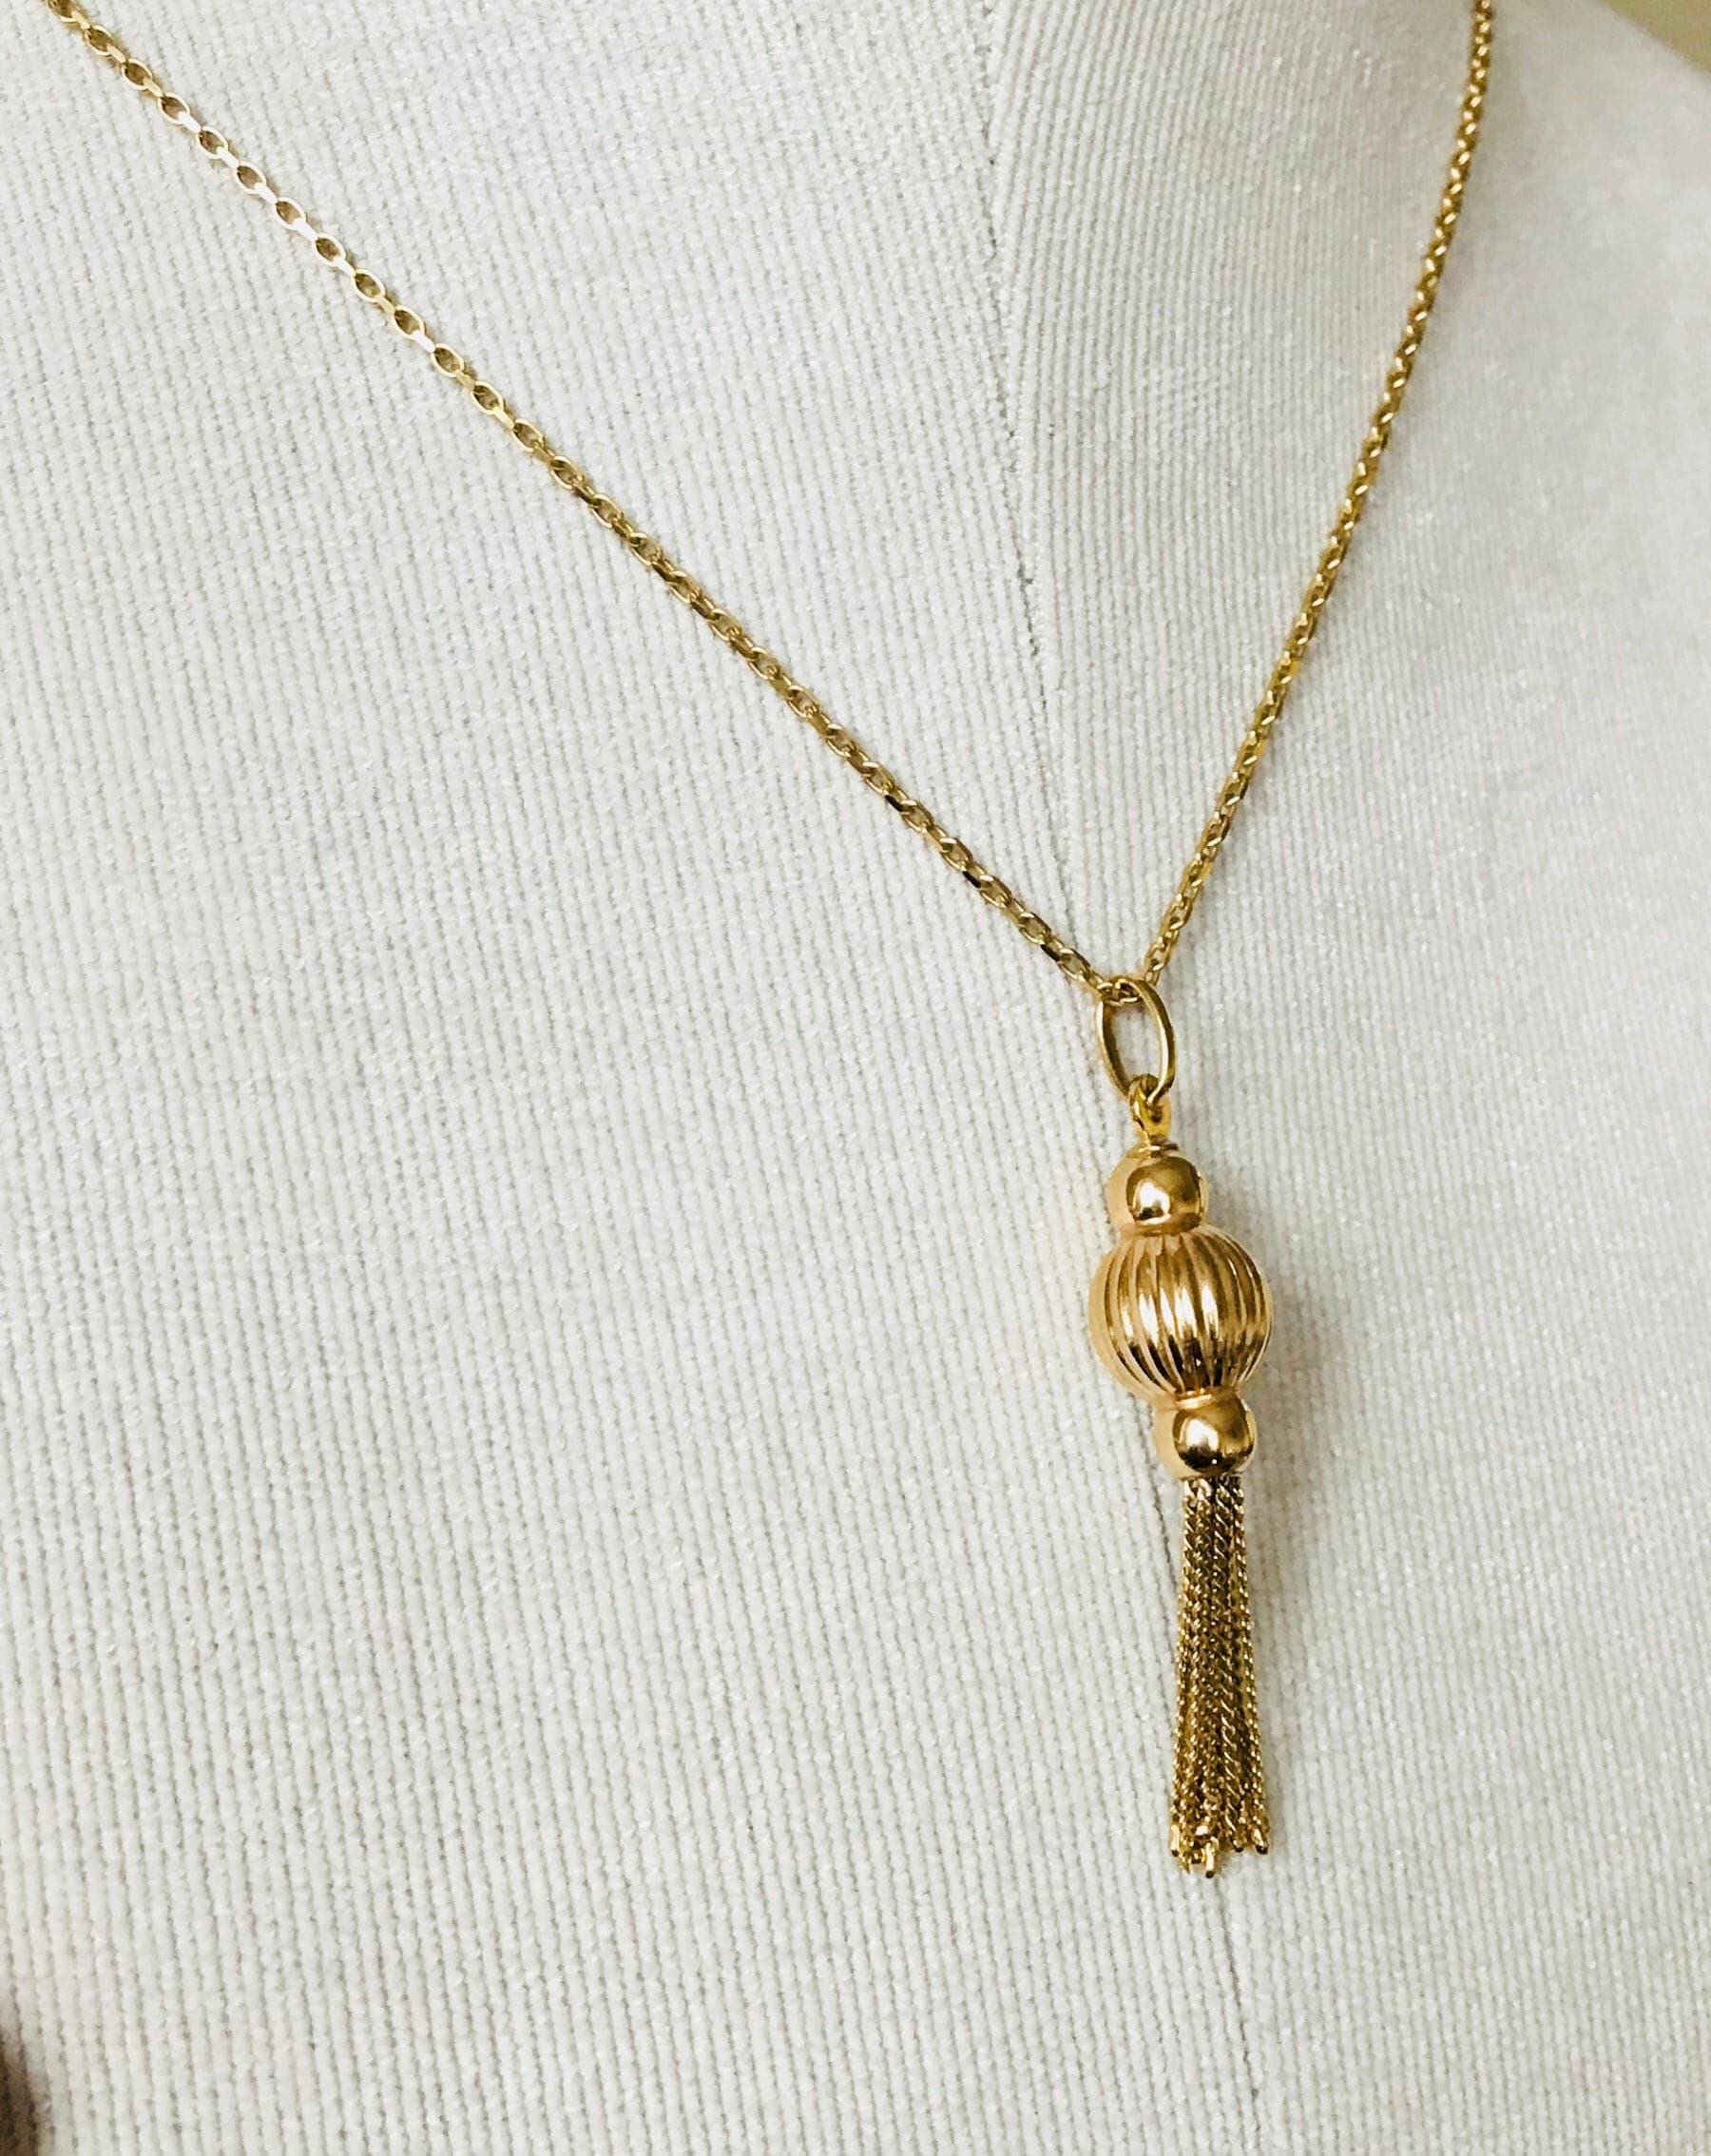 Stunning vintage 9ct gold Tassel necklace - fully hallmarked